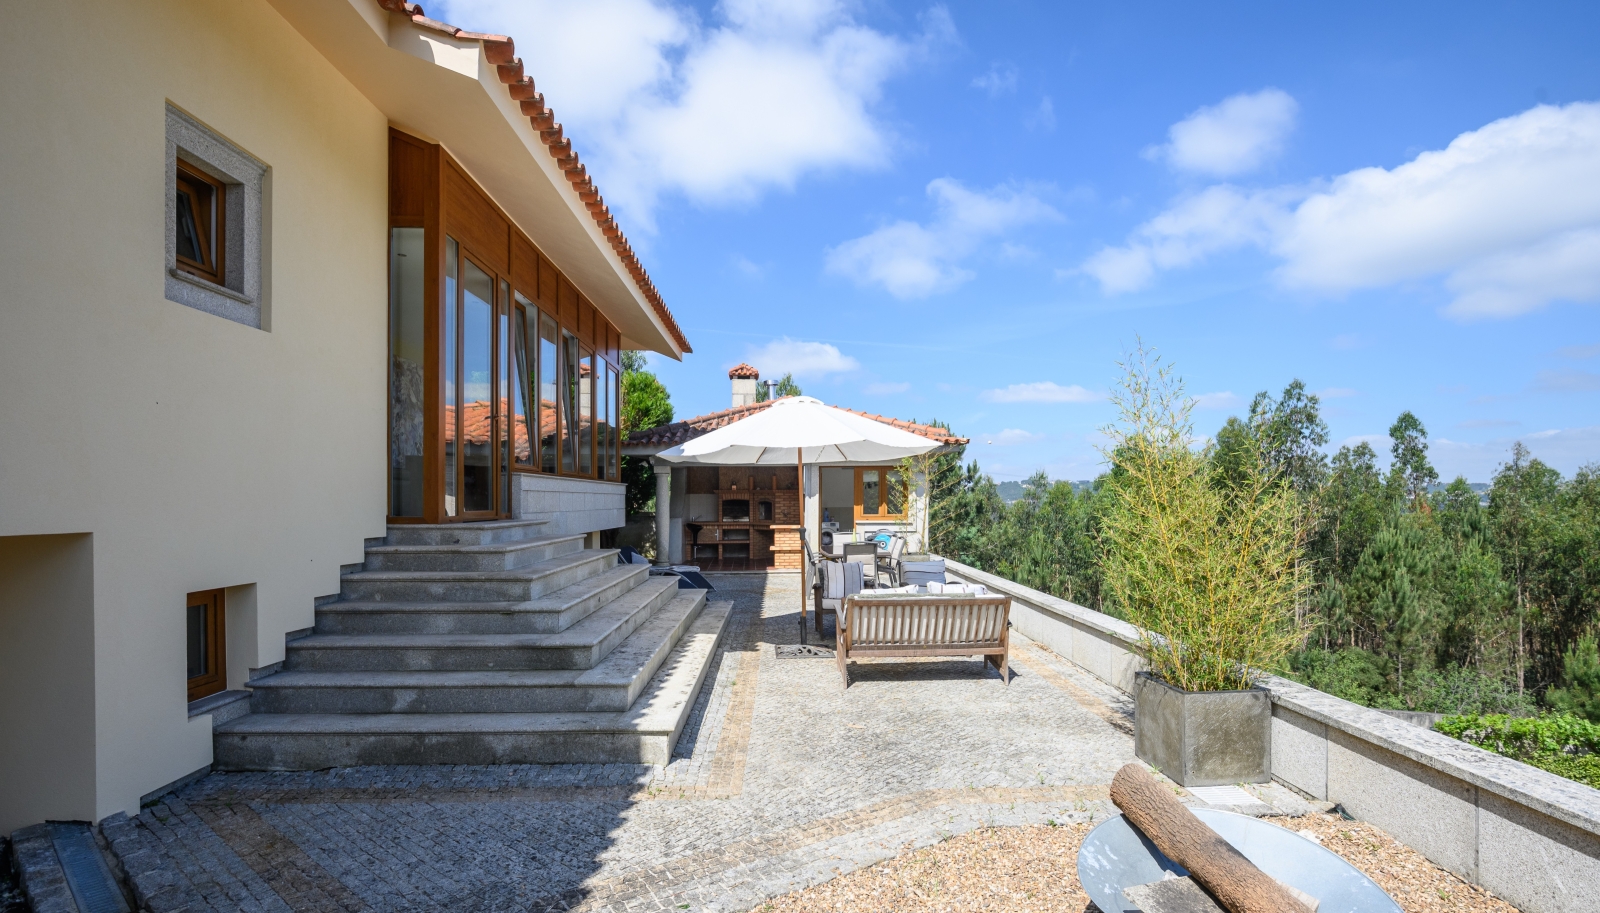 5 bedroom villa with garden and views, for sale, in Foz do Sousa in Gondomar, Porto, Portugal_225222